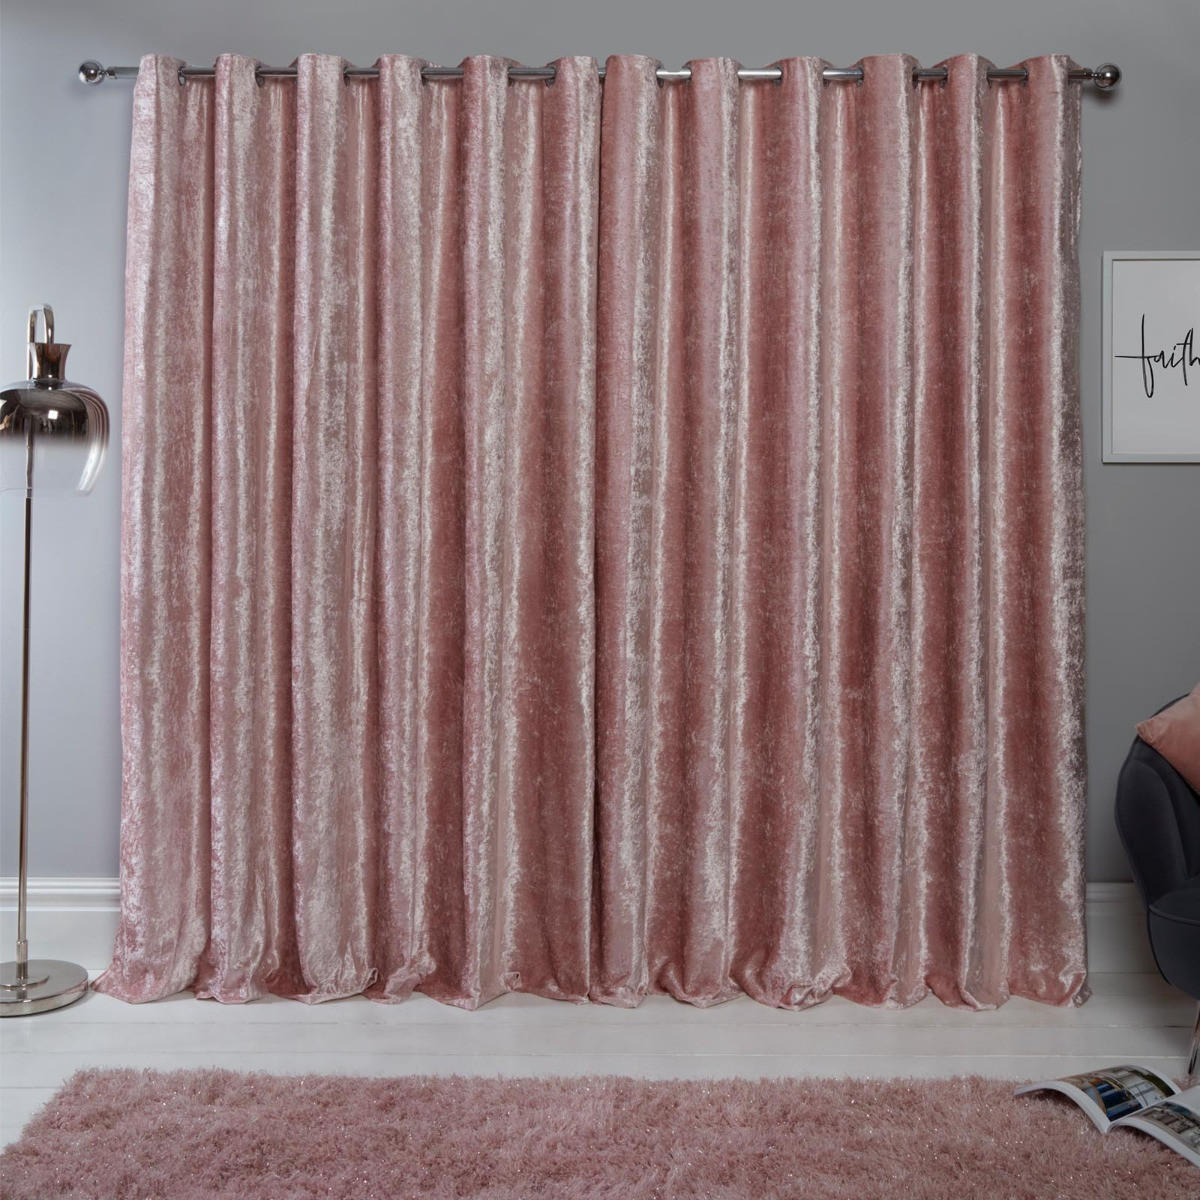 Sienna Home Crushed Velvet Eyelet Curtains - Blush>